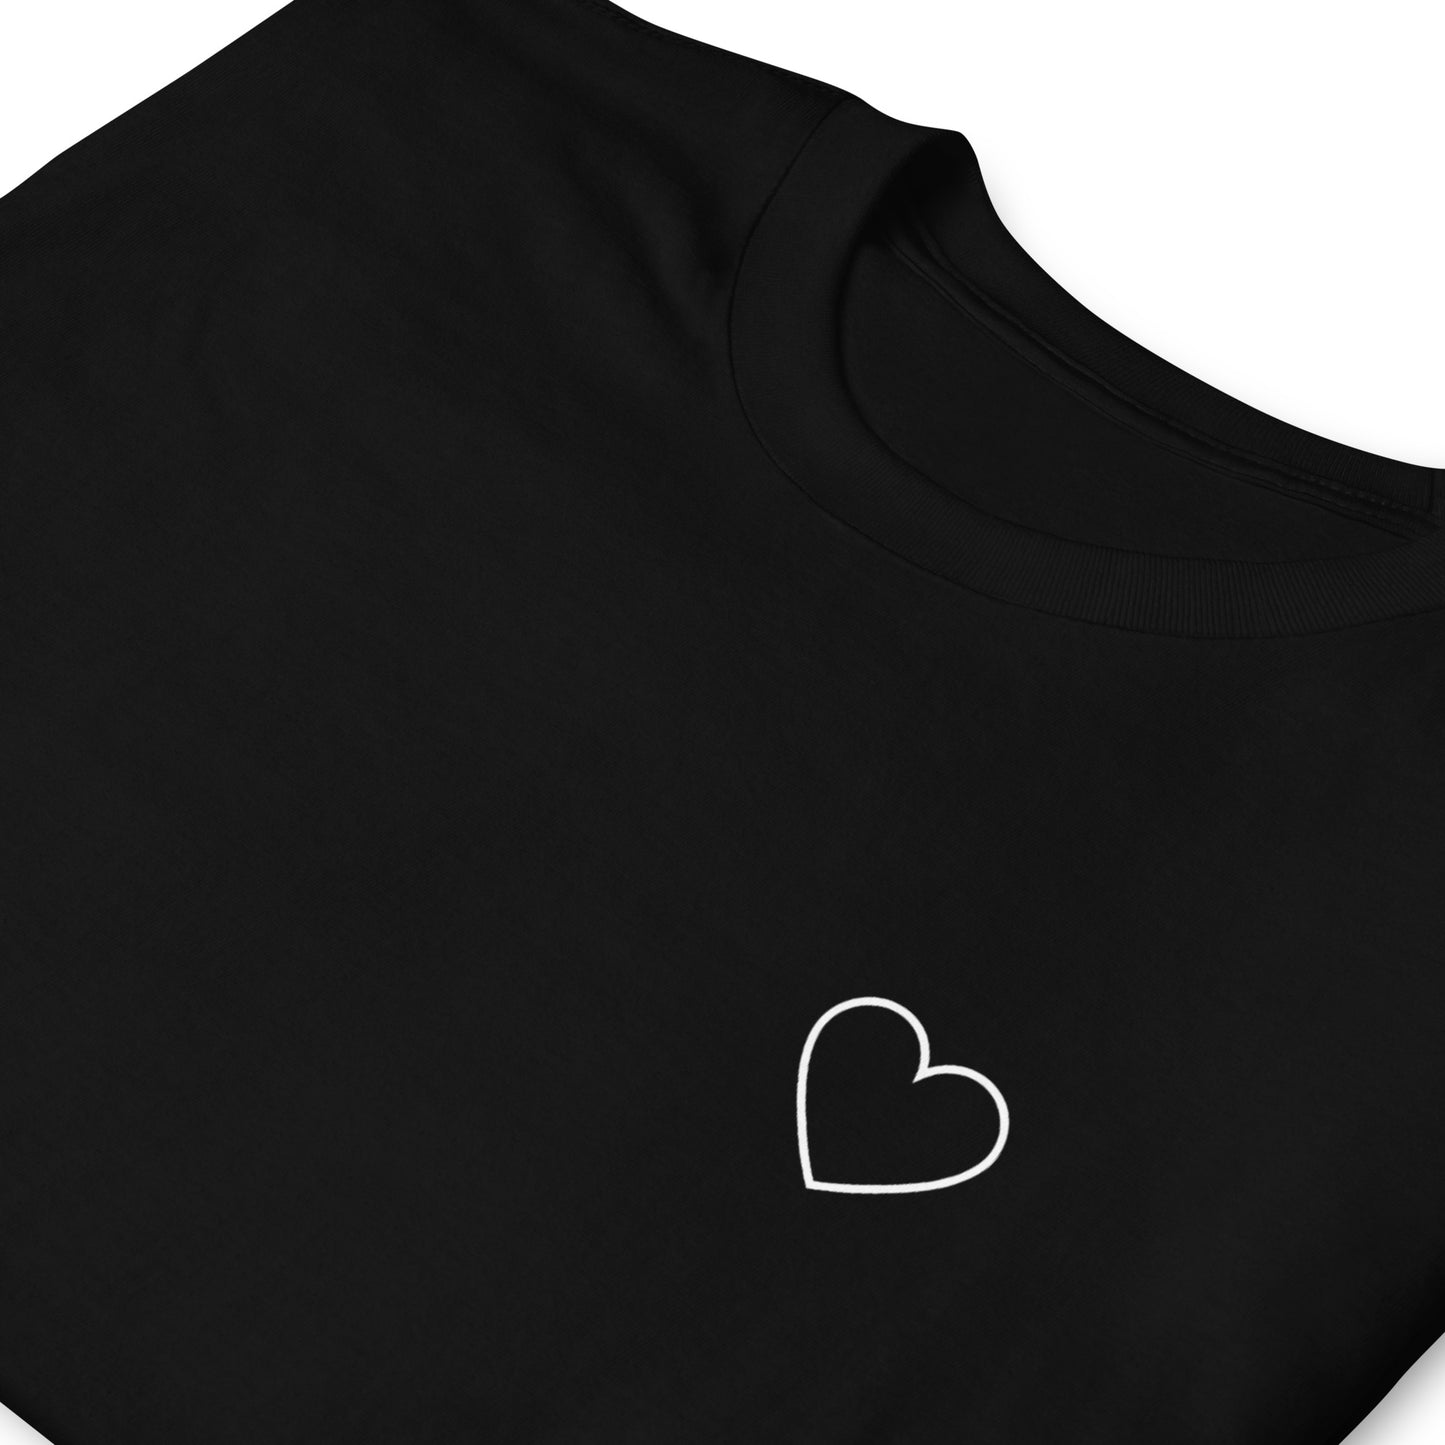 Unisex t-shirt: Minimalistic white heart